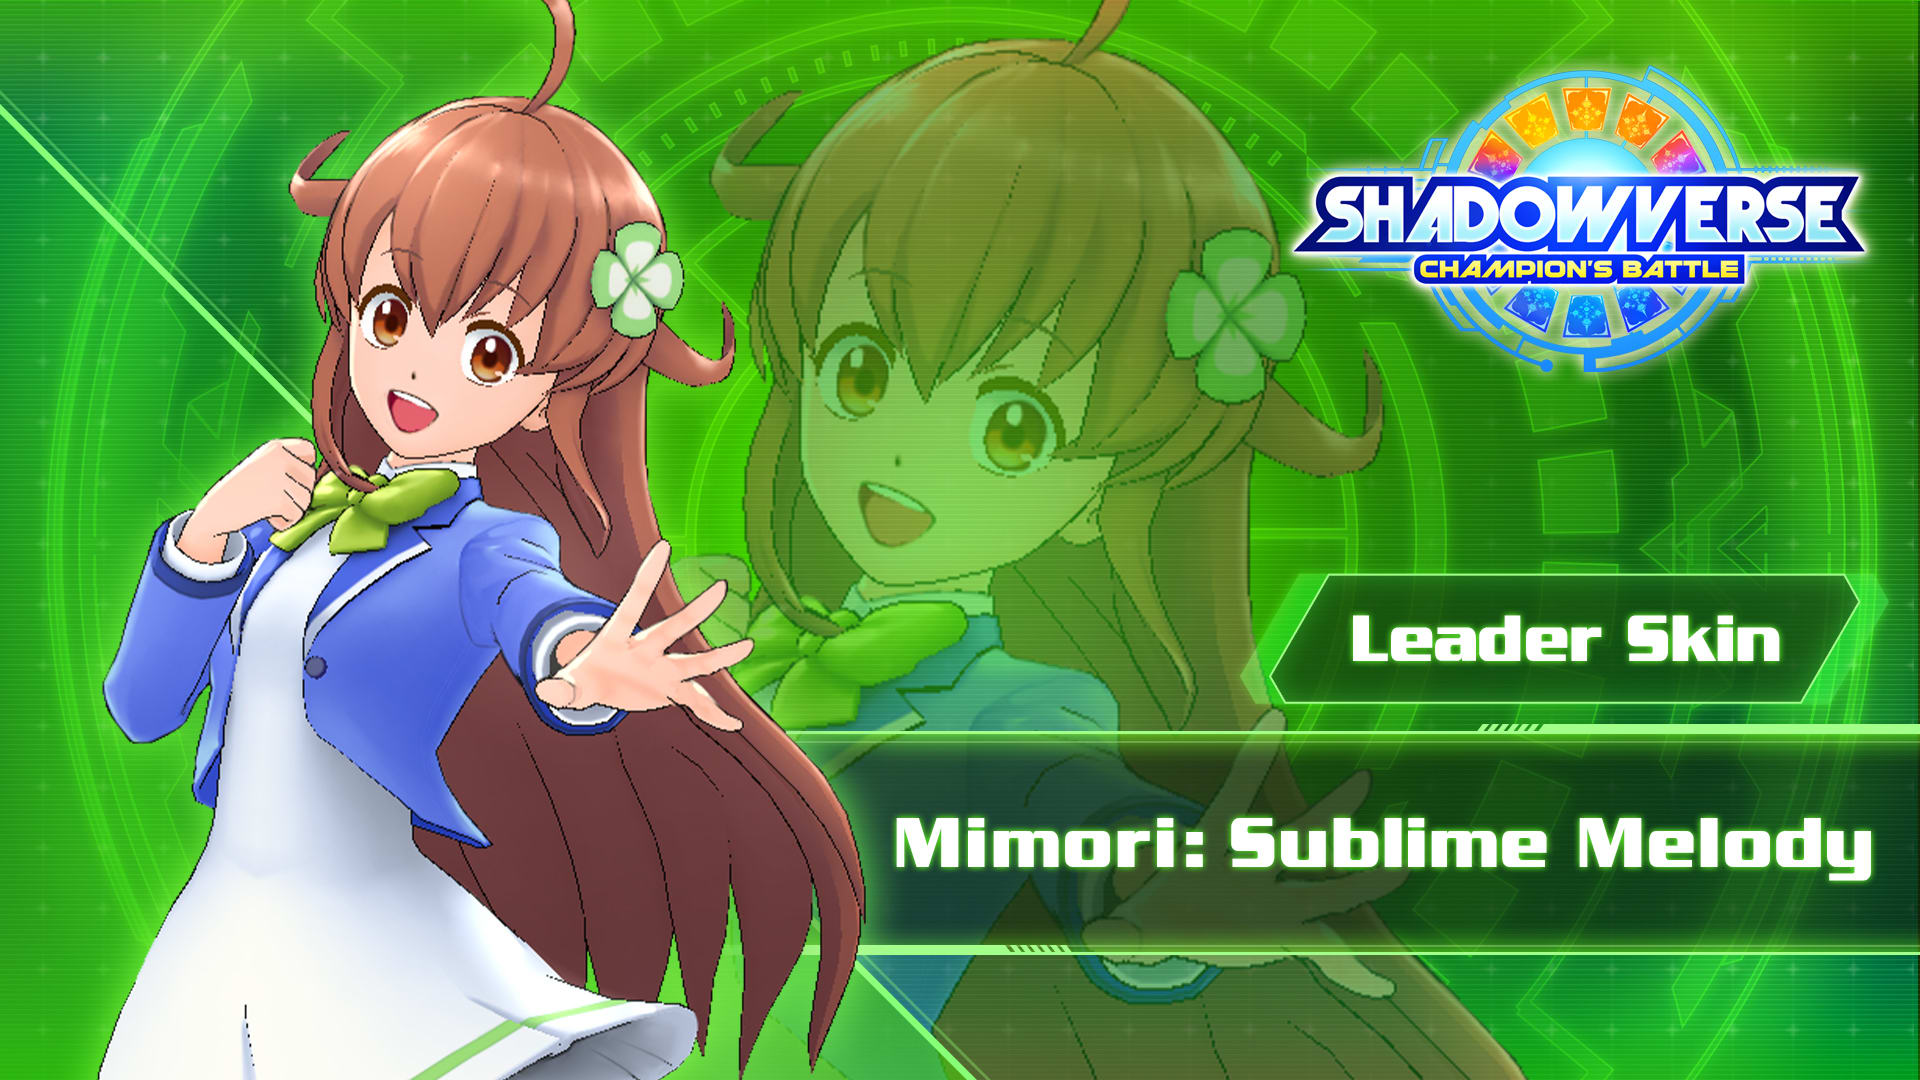 Leader Skin: "Mimori: Sublime Melody"